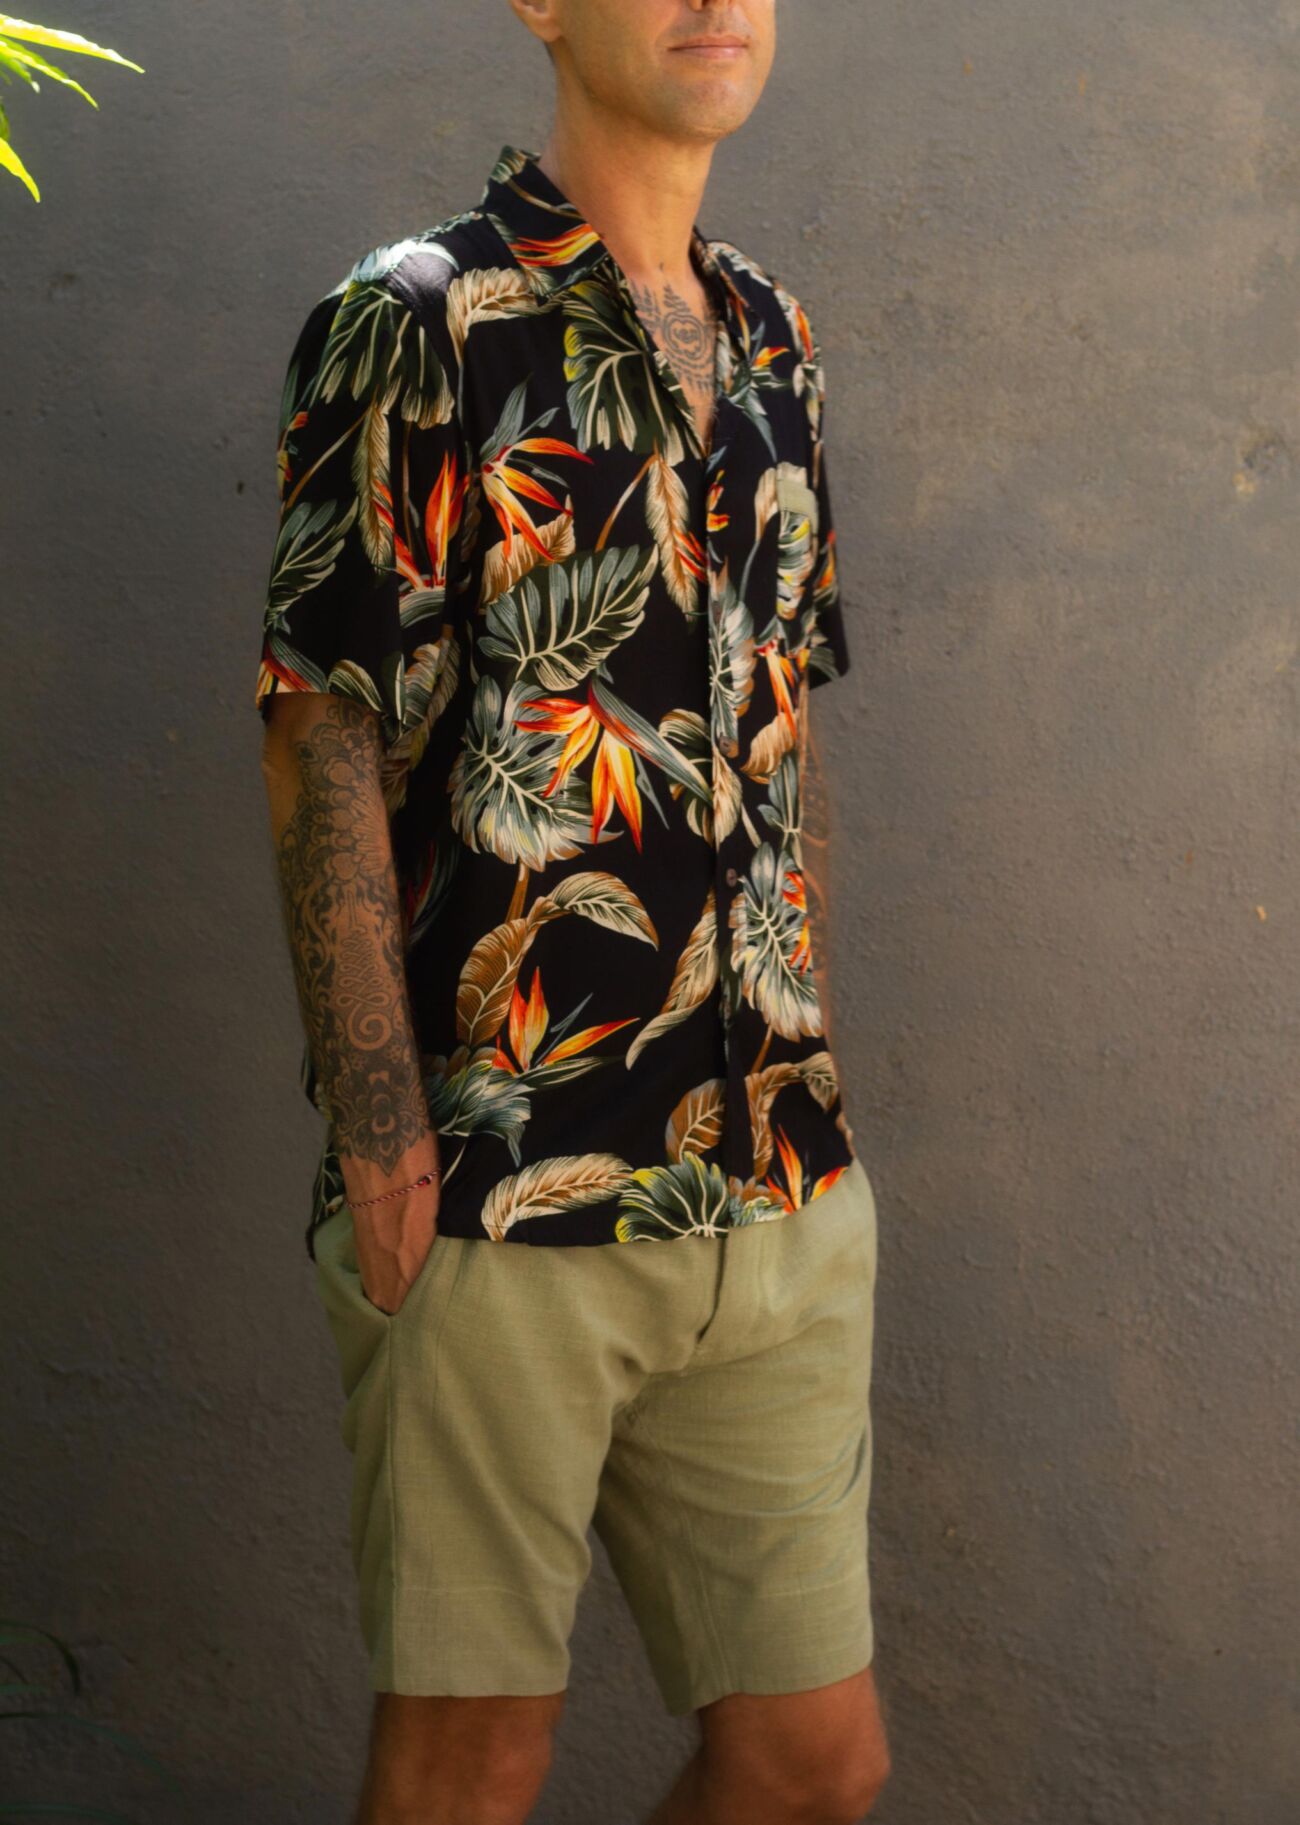 Herren-Bali-Sommer-Outfit-Hawaii-Shirt-Leinen-Bermuda-Shorts